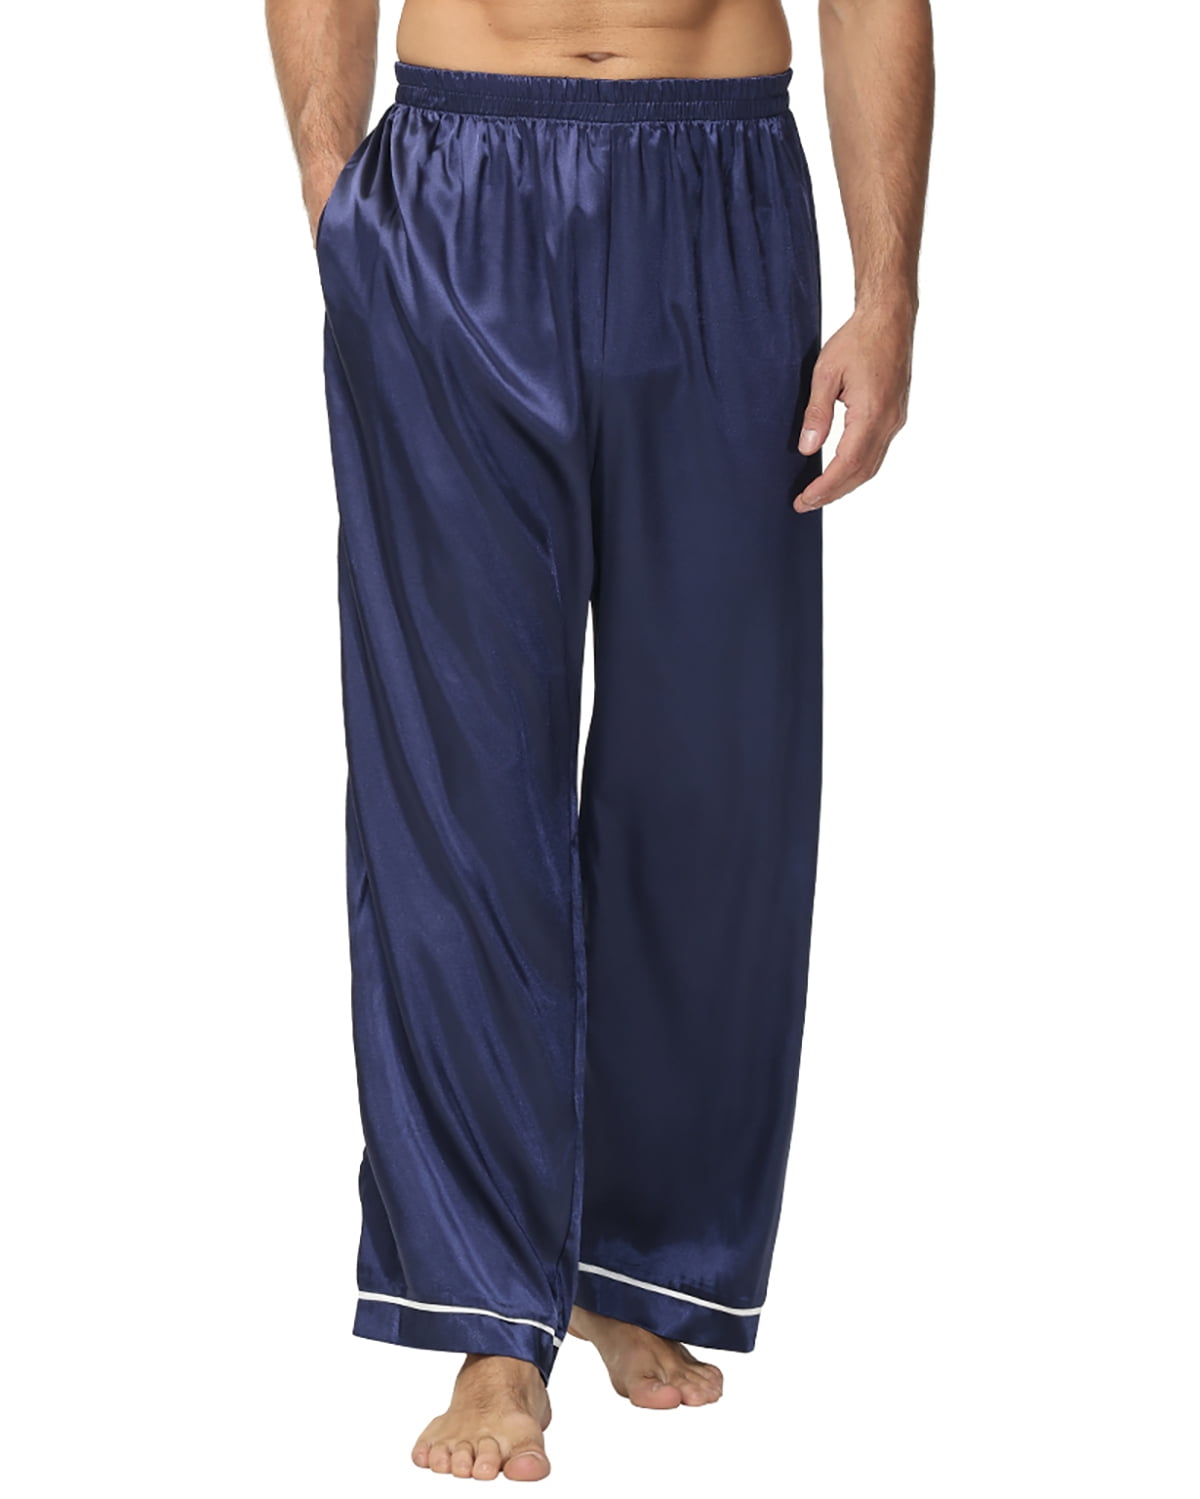 YUHAOTIN Sleepwear Sets for Men Winter Mens Summer Pyjamas Silk